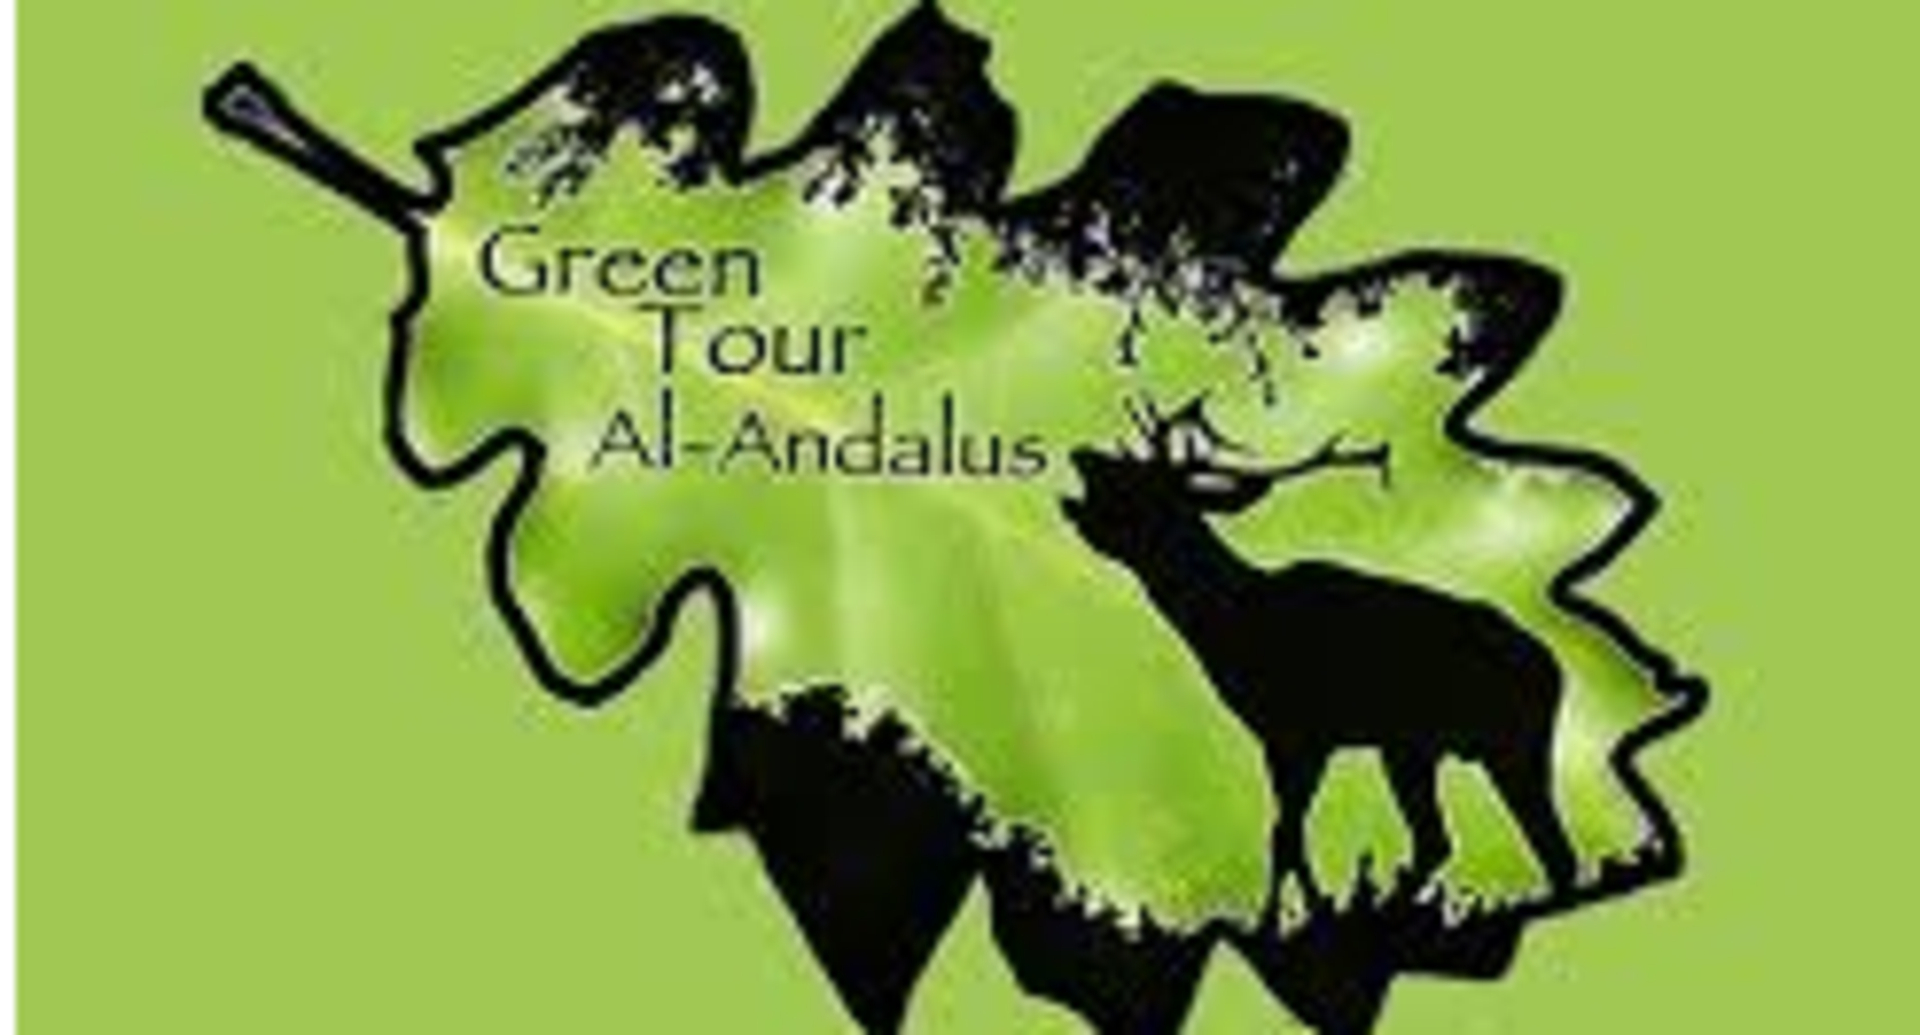 Green tour Al-Andalus